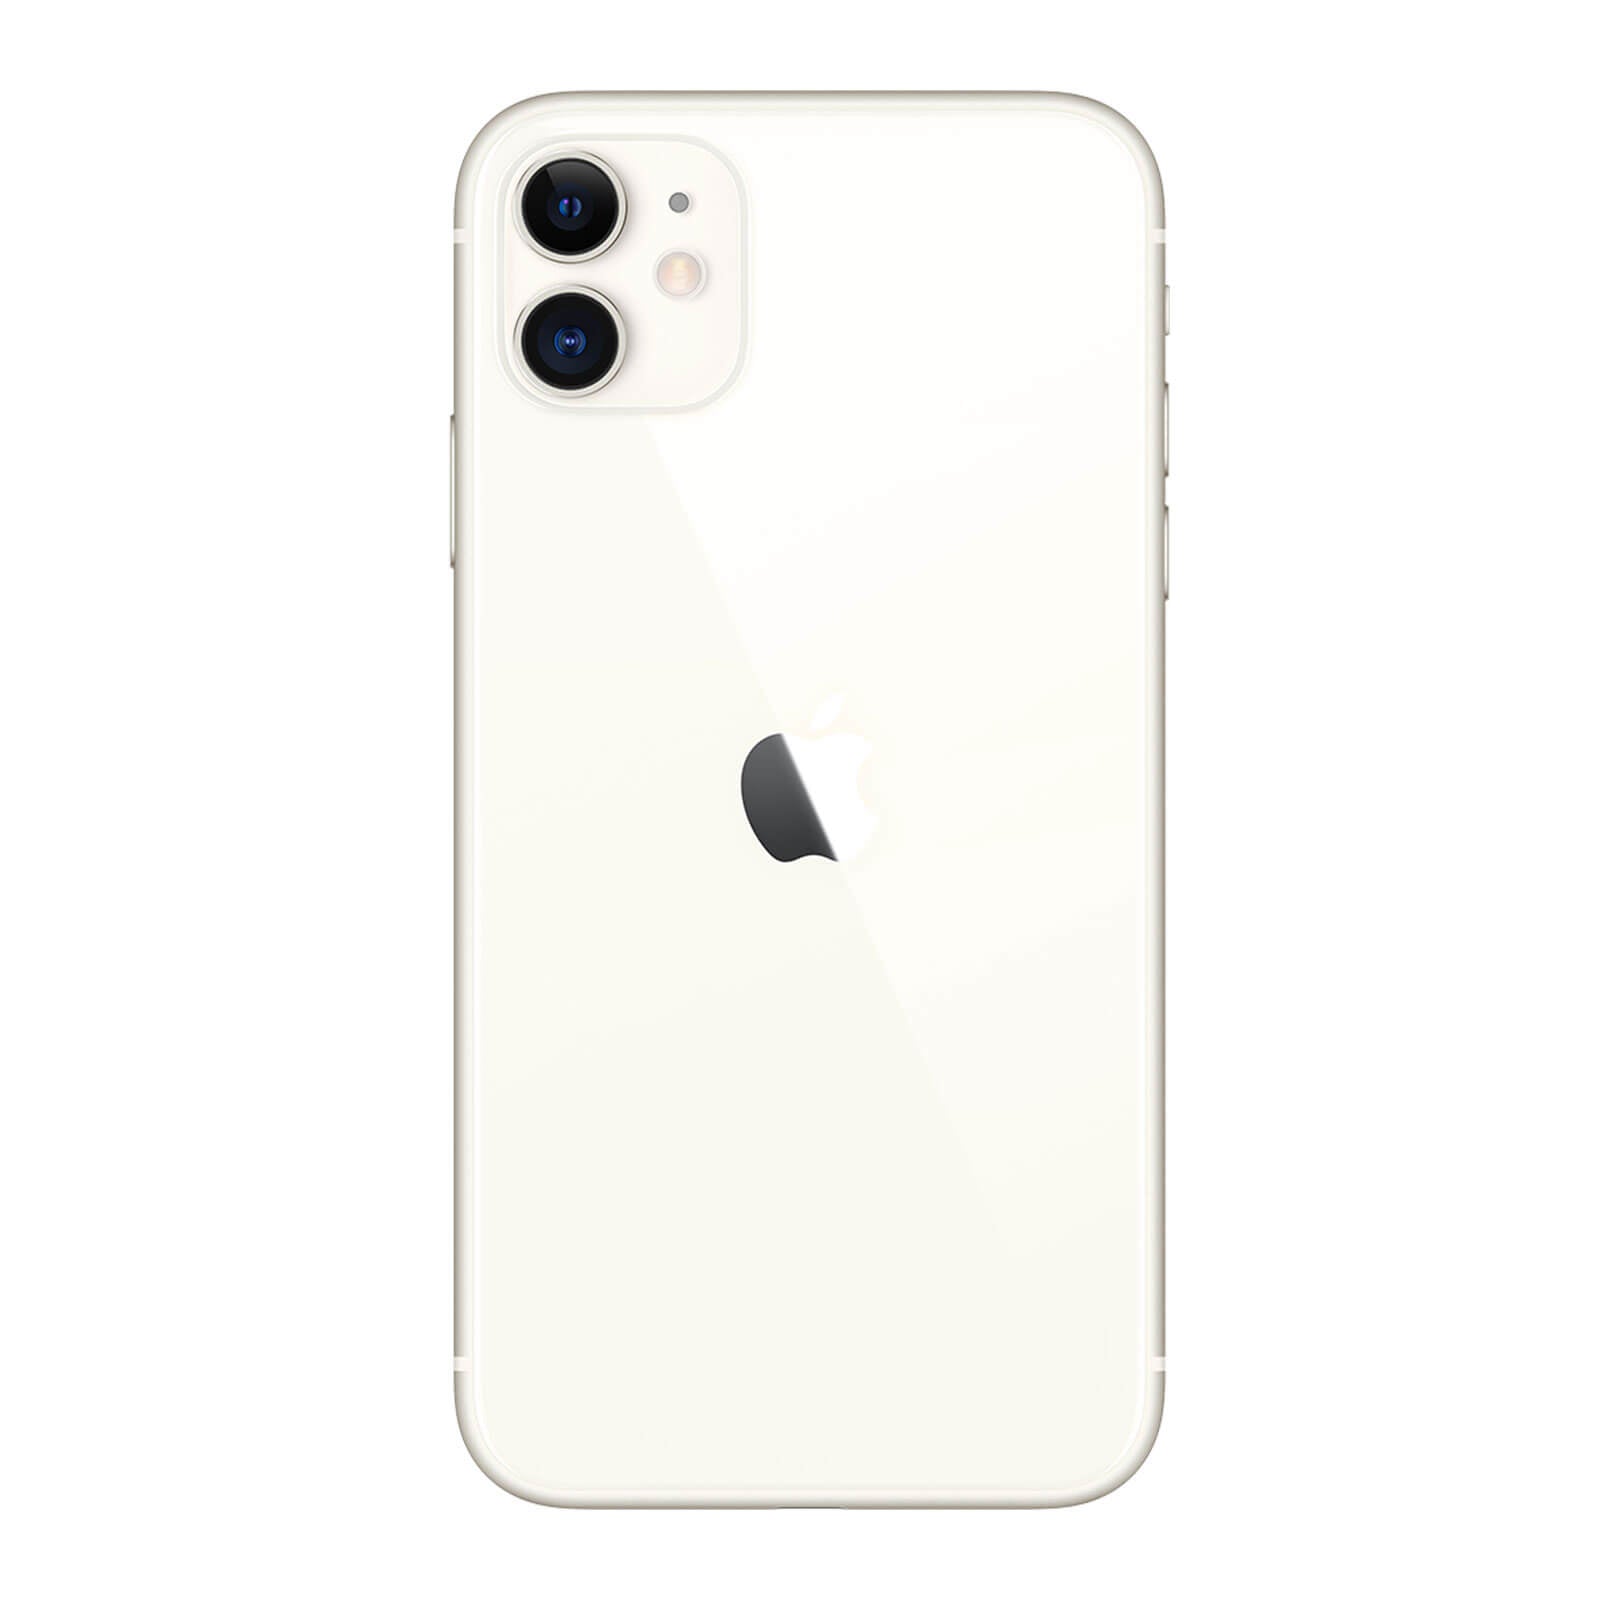 Apple iPhone 11 64GB White Pristine - Unlocked